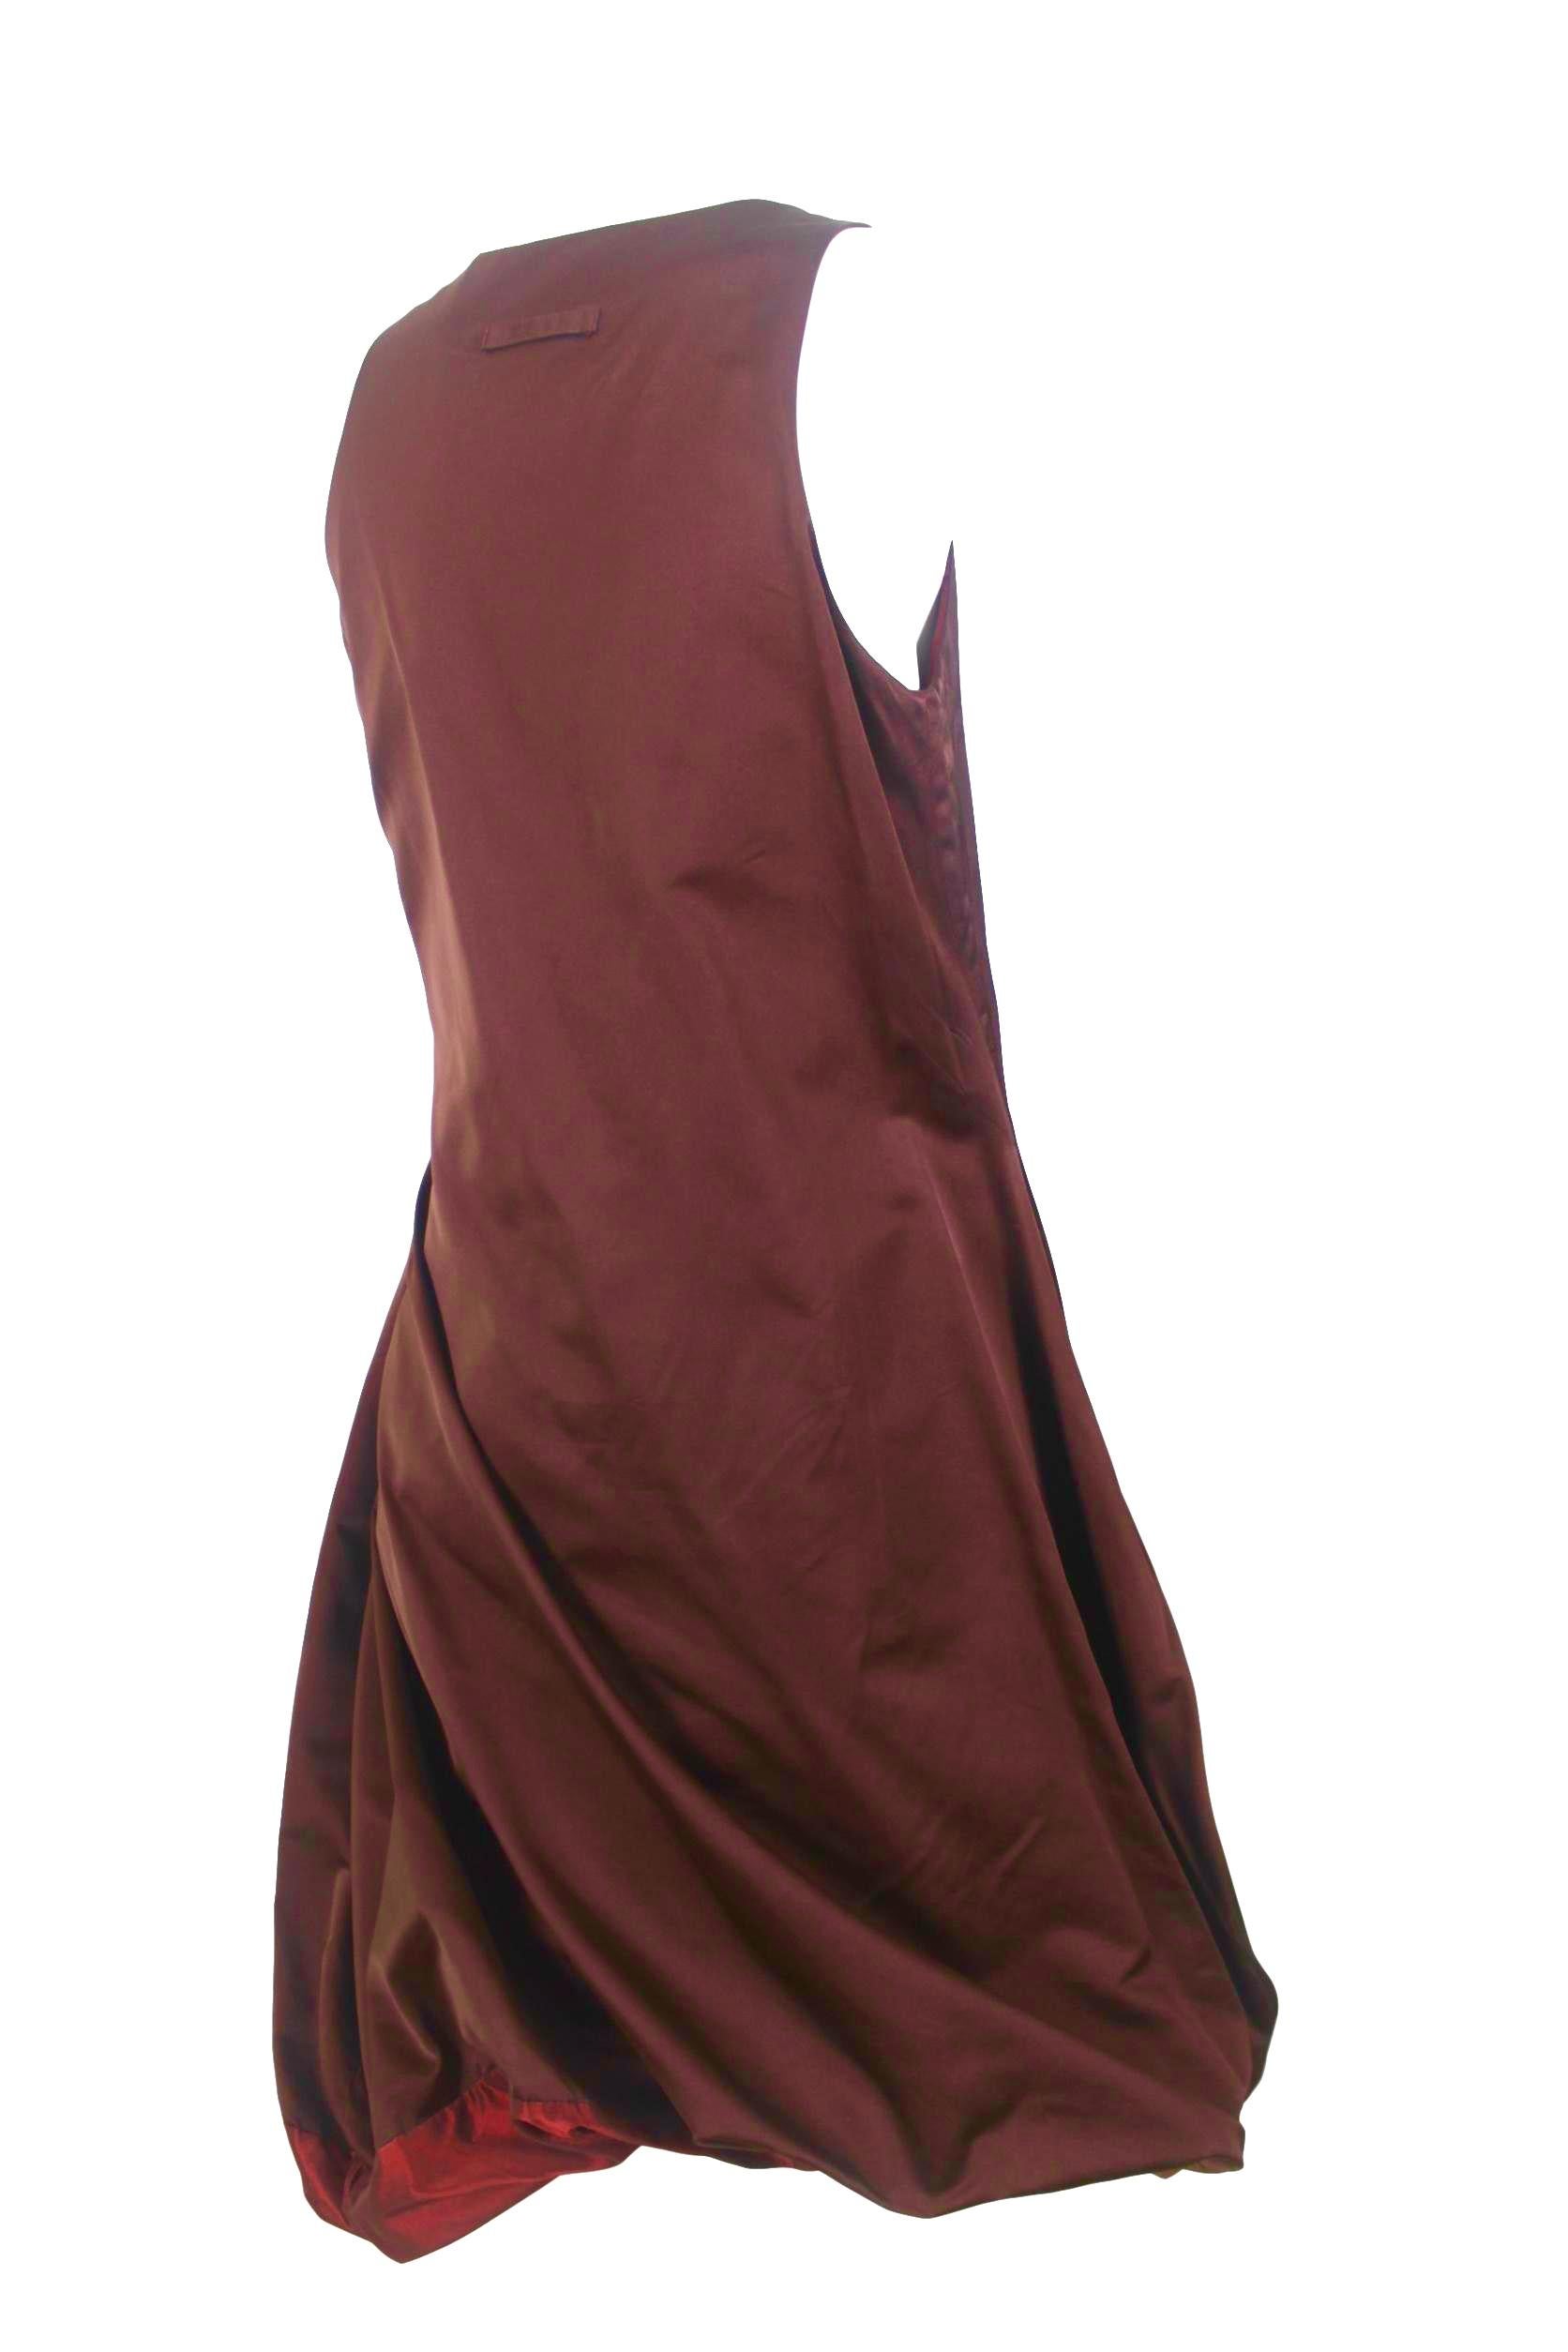 Jean Paul Gaultier Classique Label Bronze Satin Balloon Dress Spring/Summer 2003 For Sale 1